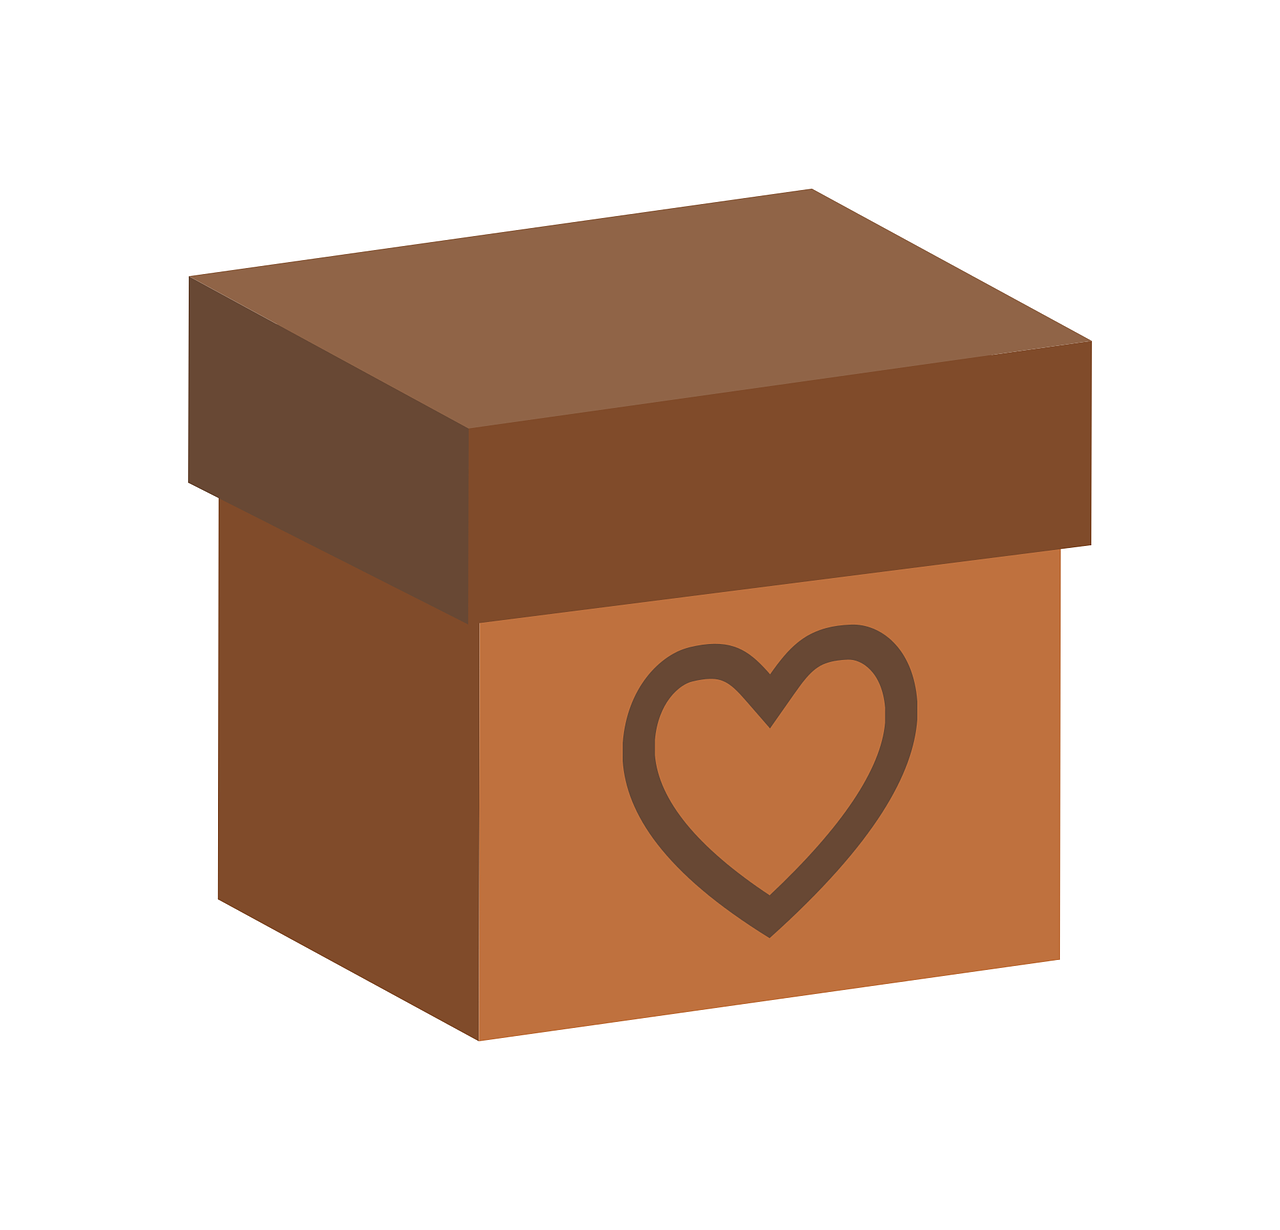 a box with a heart drawn on it, folk art, anime set style, brown body, single solid body, celebration